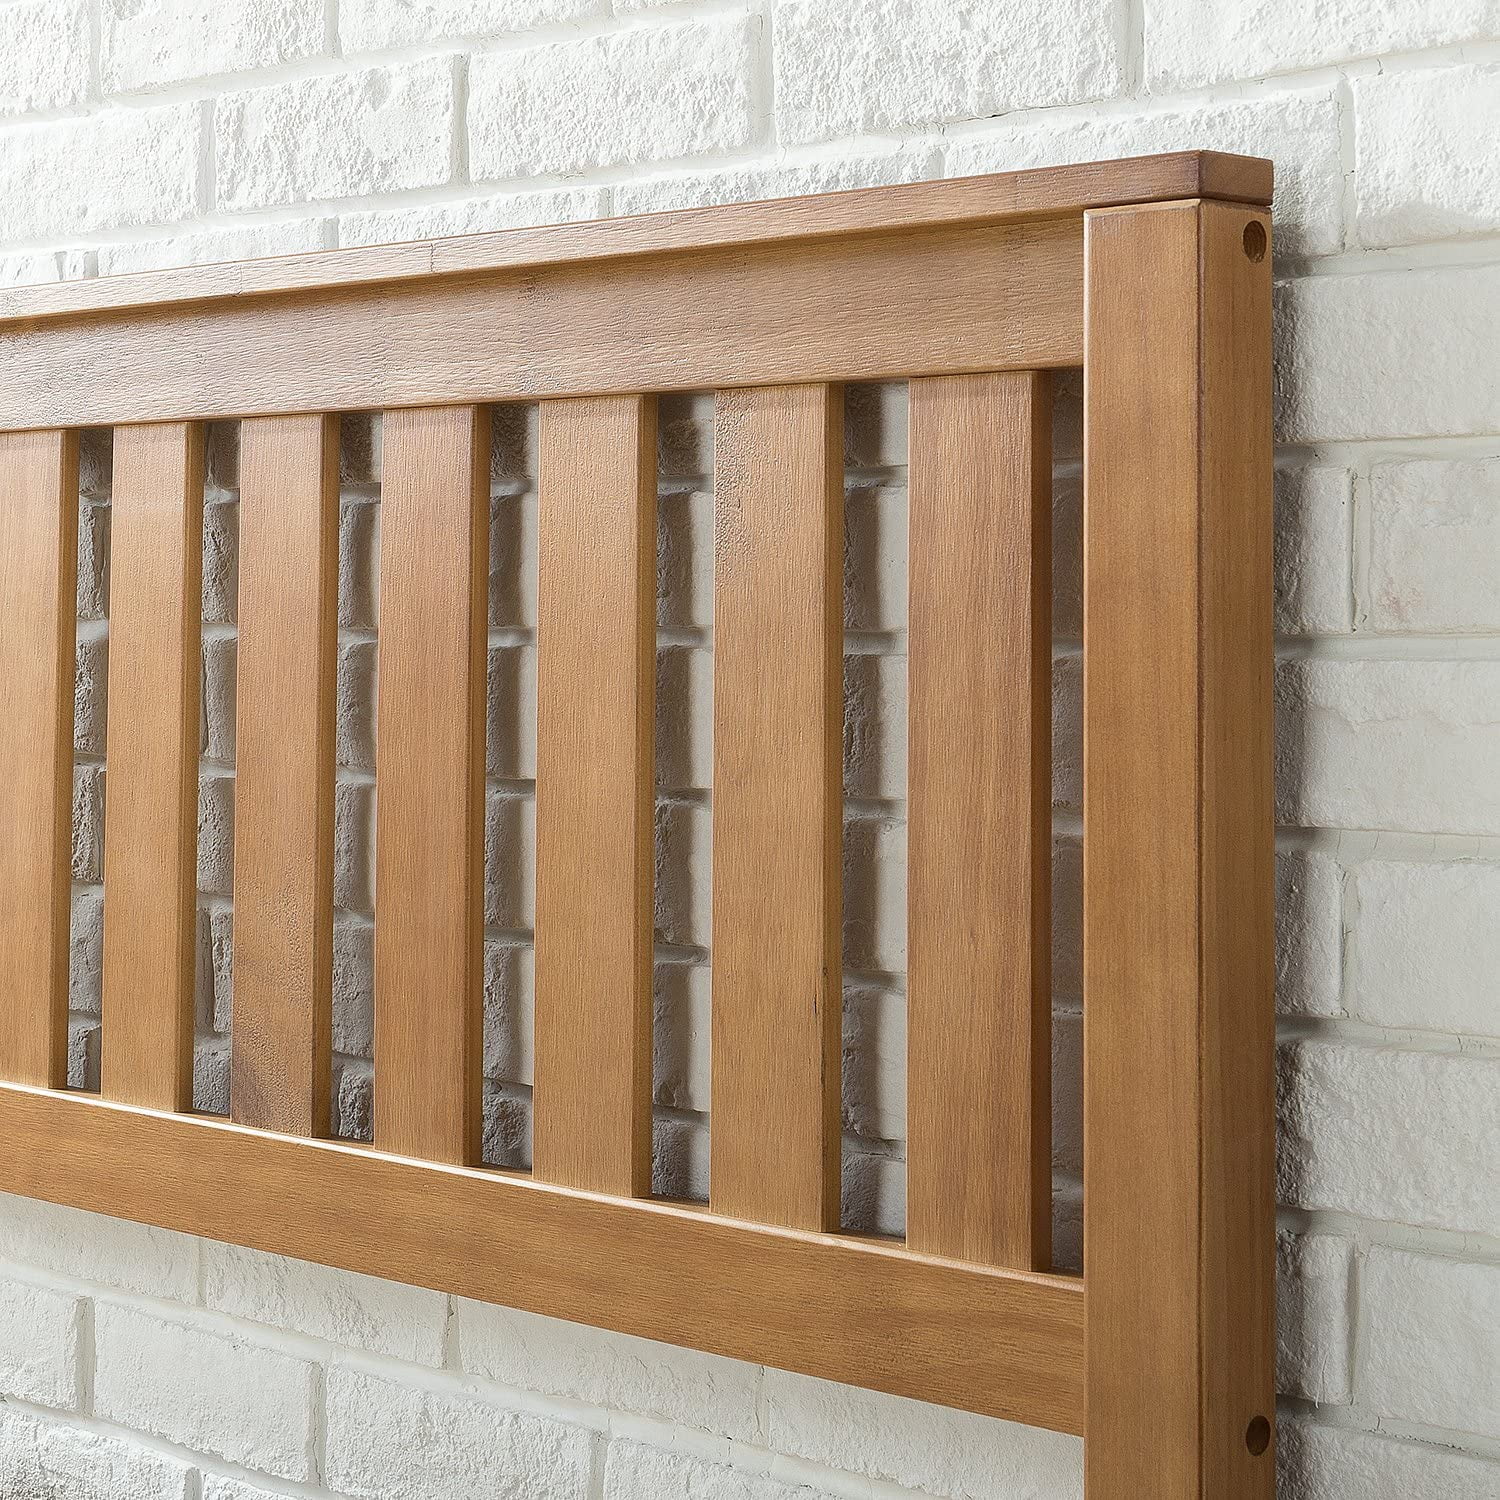 zinus alexia wood platform bed